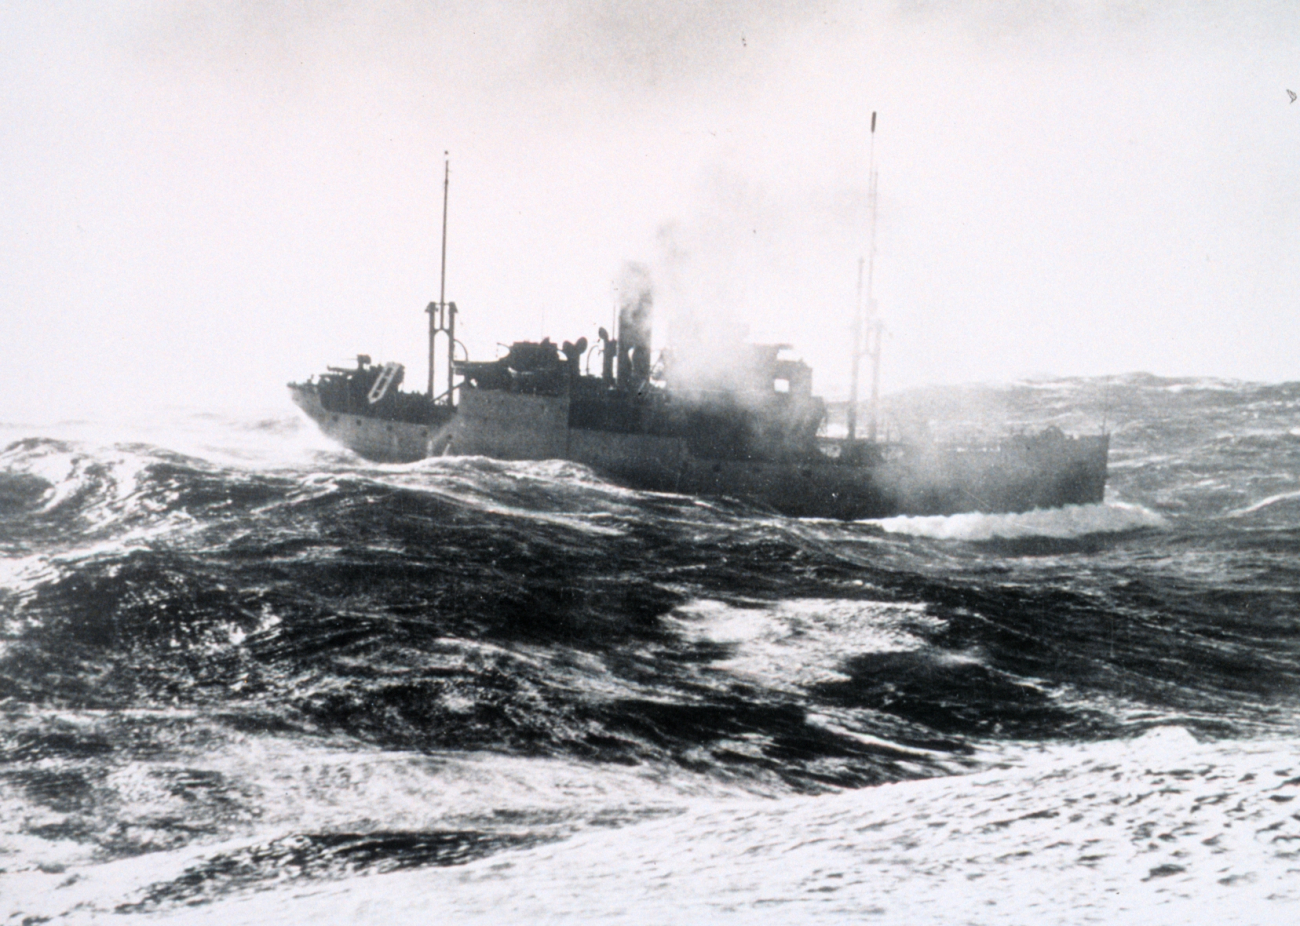 World War II North Atlantic convoy dutyMerchant vessel as seen from U